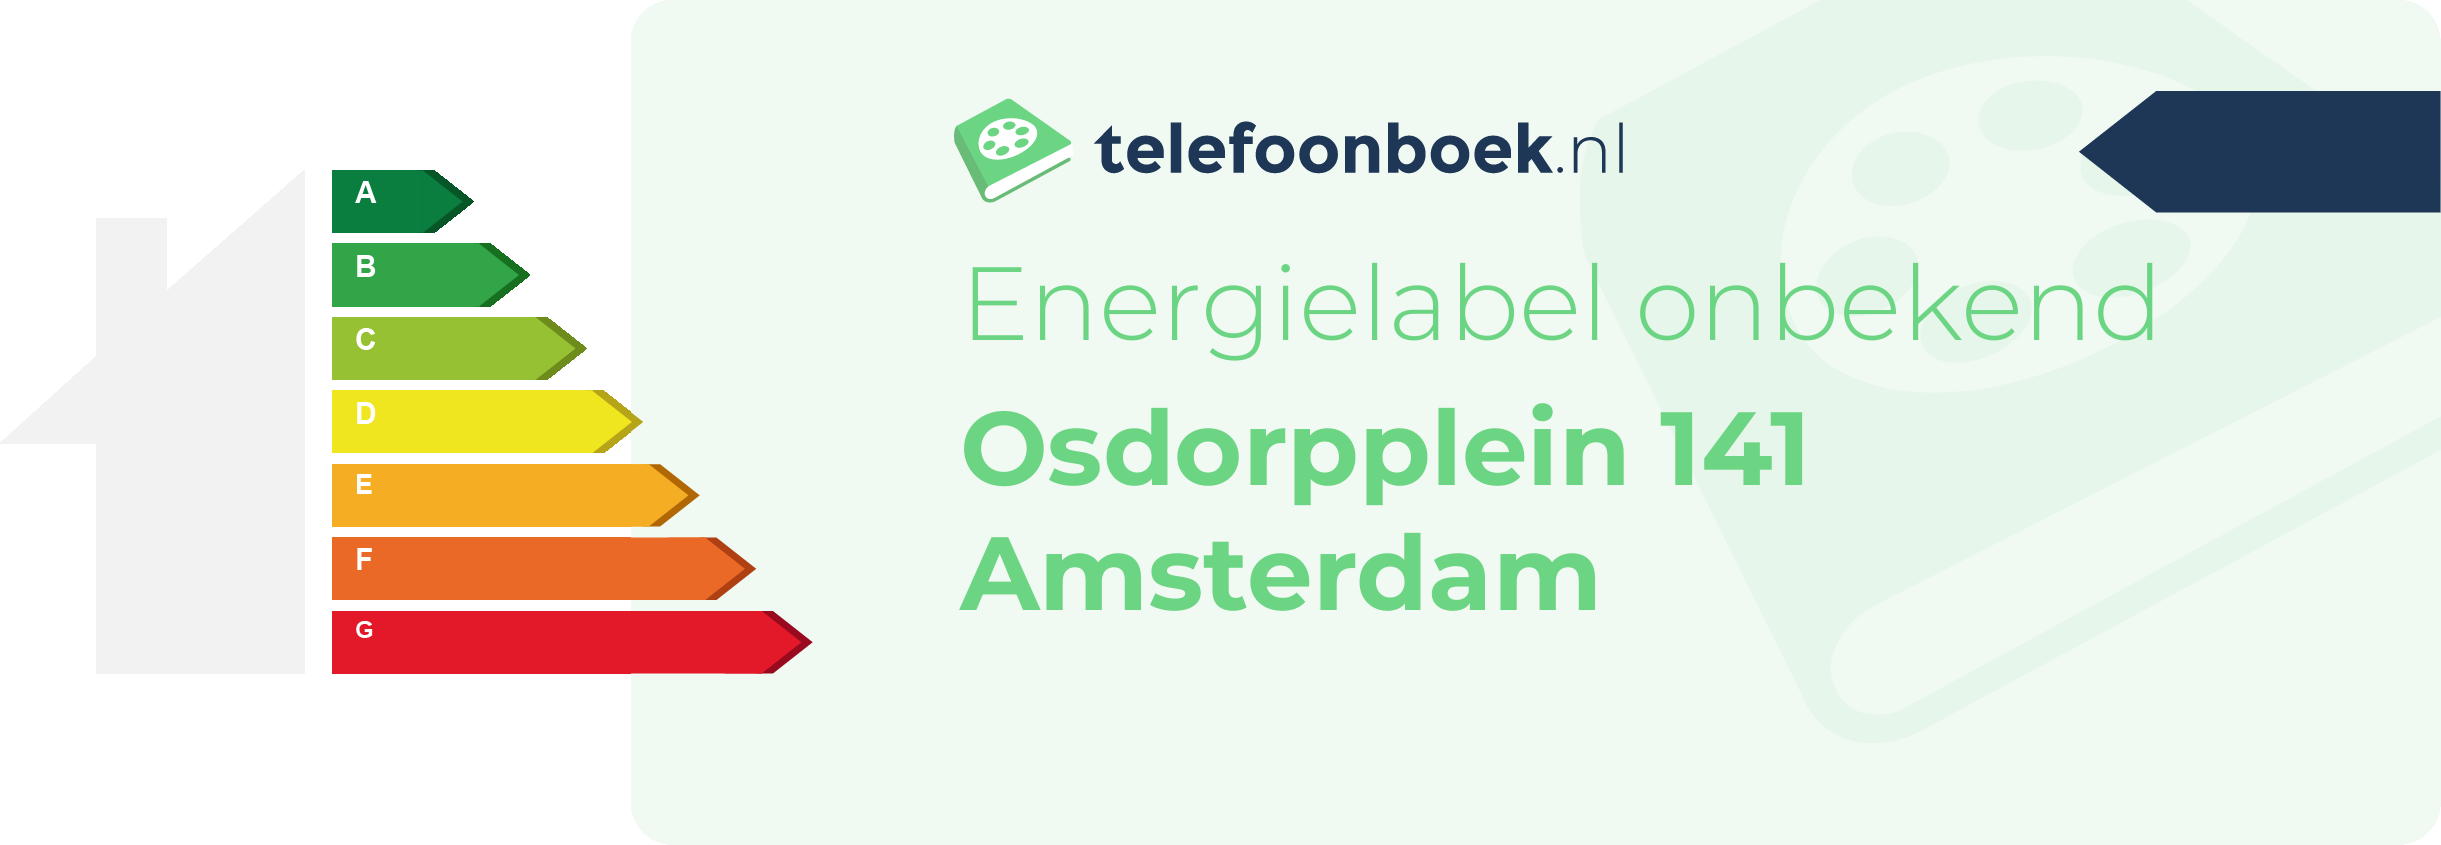 Energielabel Osdorpplein 141 Amsterdam